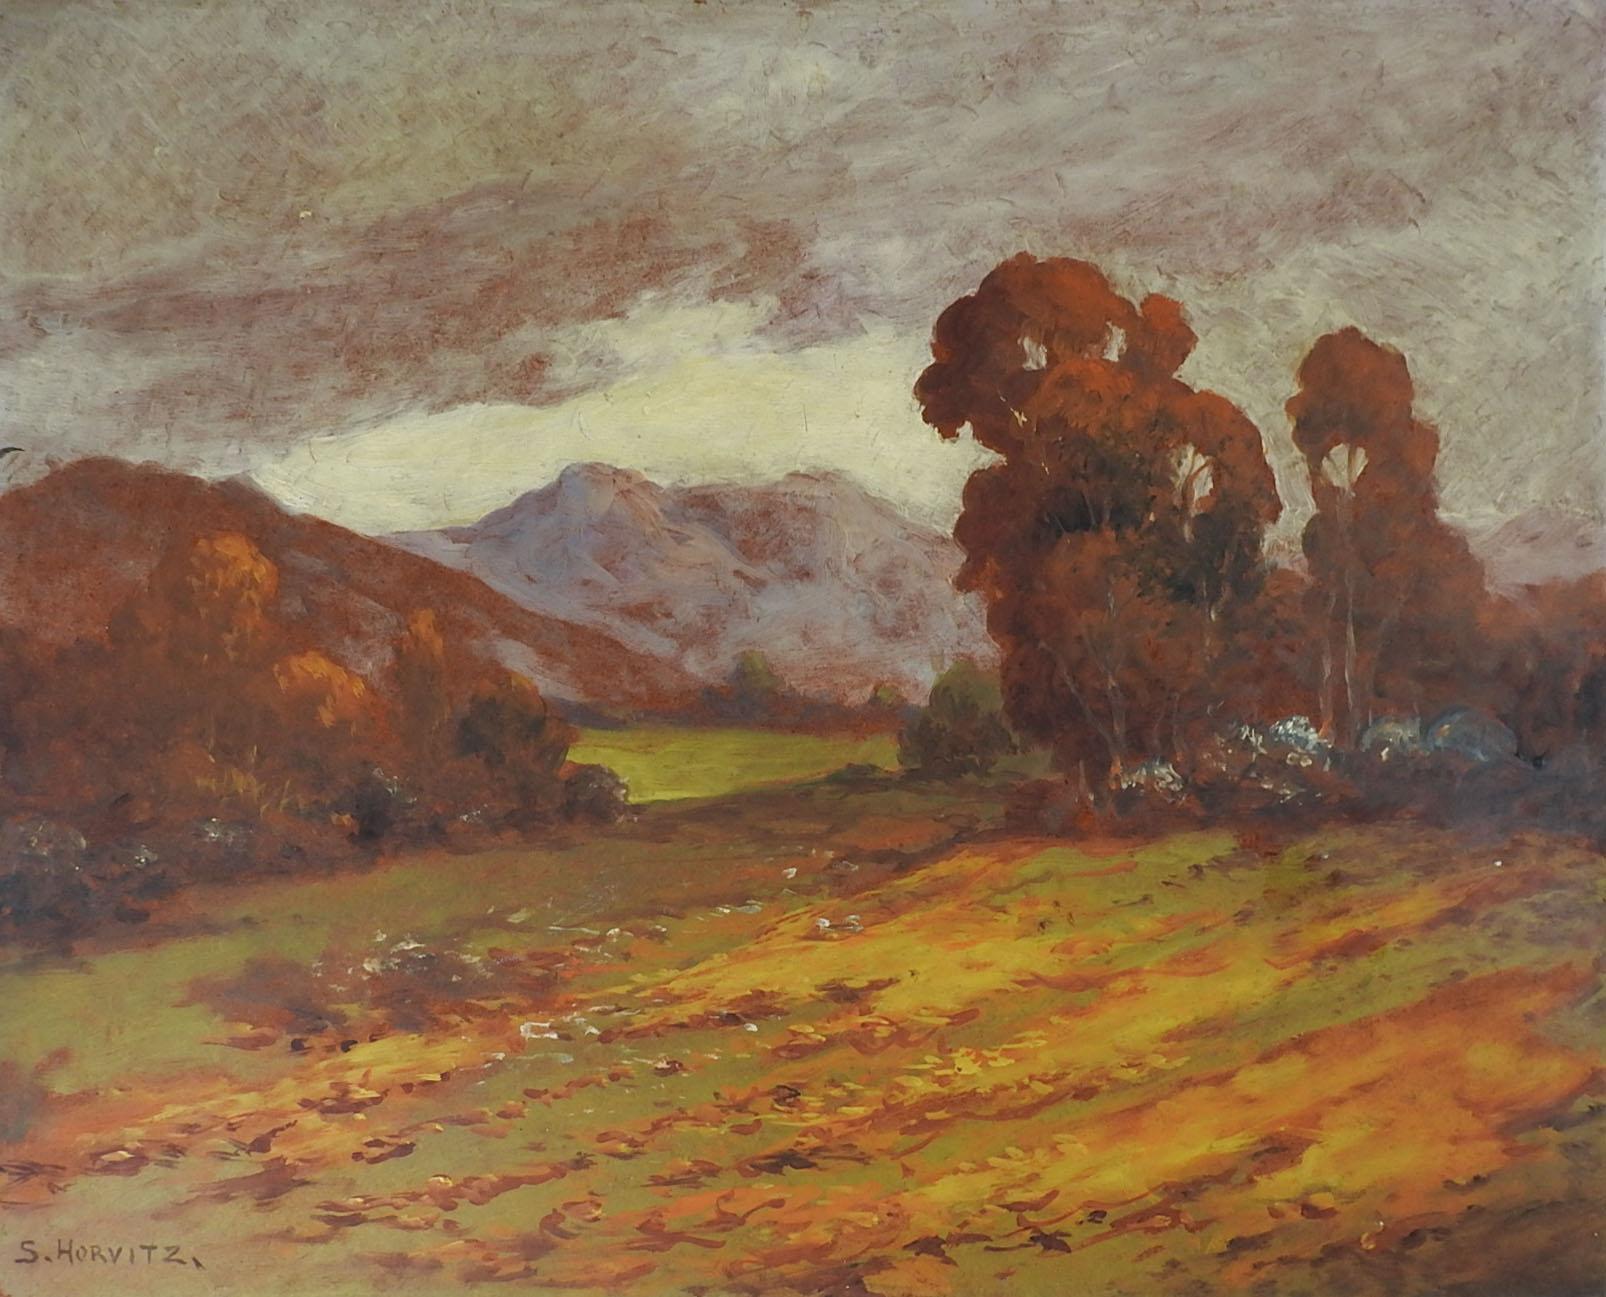 Vintage early 20th century Impressionist oil on masonite mountain valley landscape painting. Signed S. Horvitz lower left corner. Unframed, edge wear.